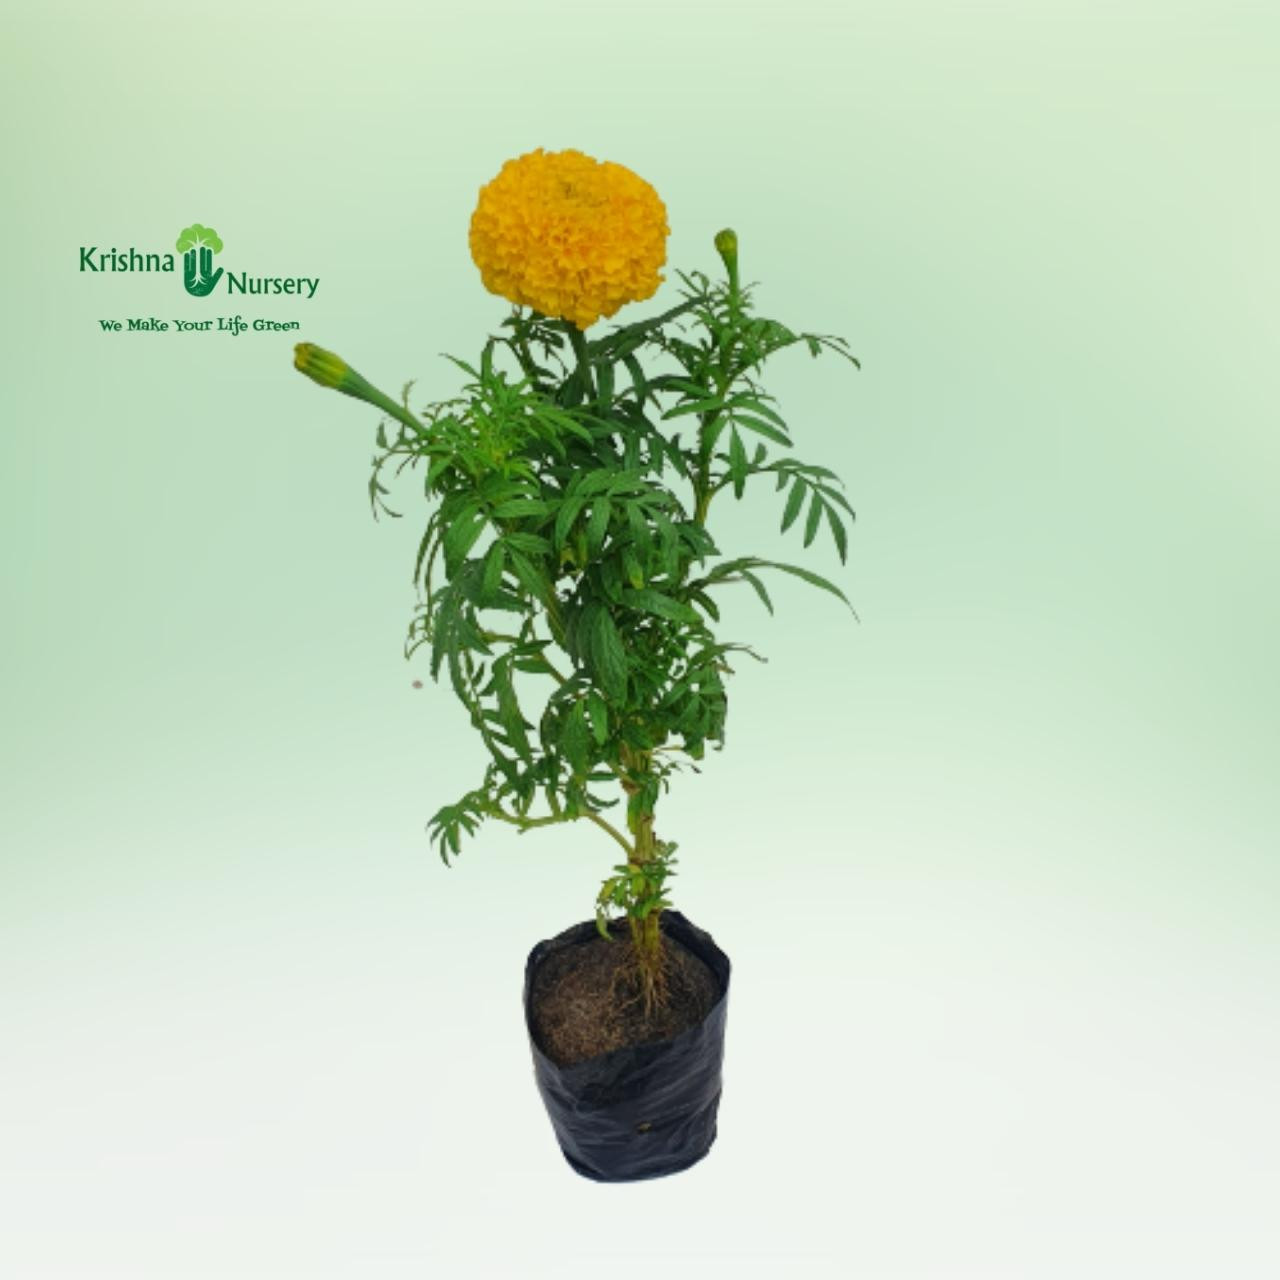 marigold-plant-yellow-flower